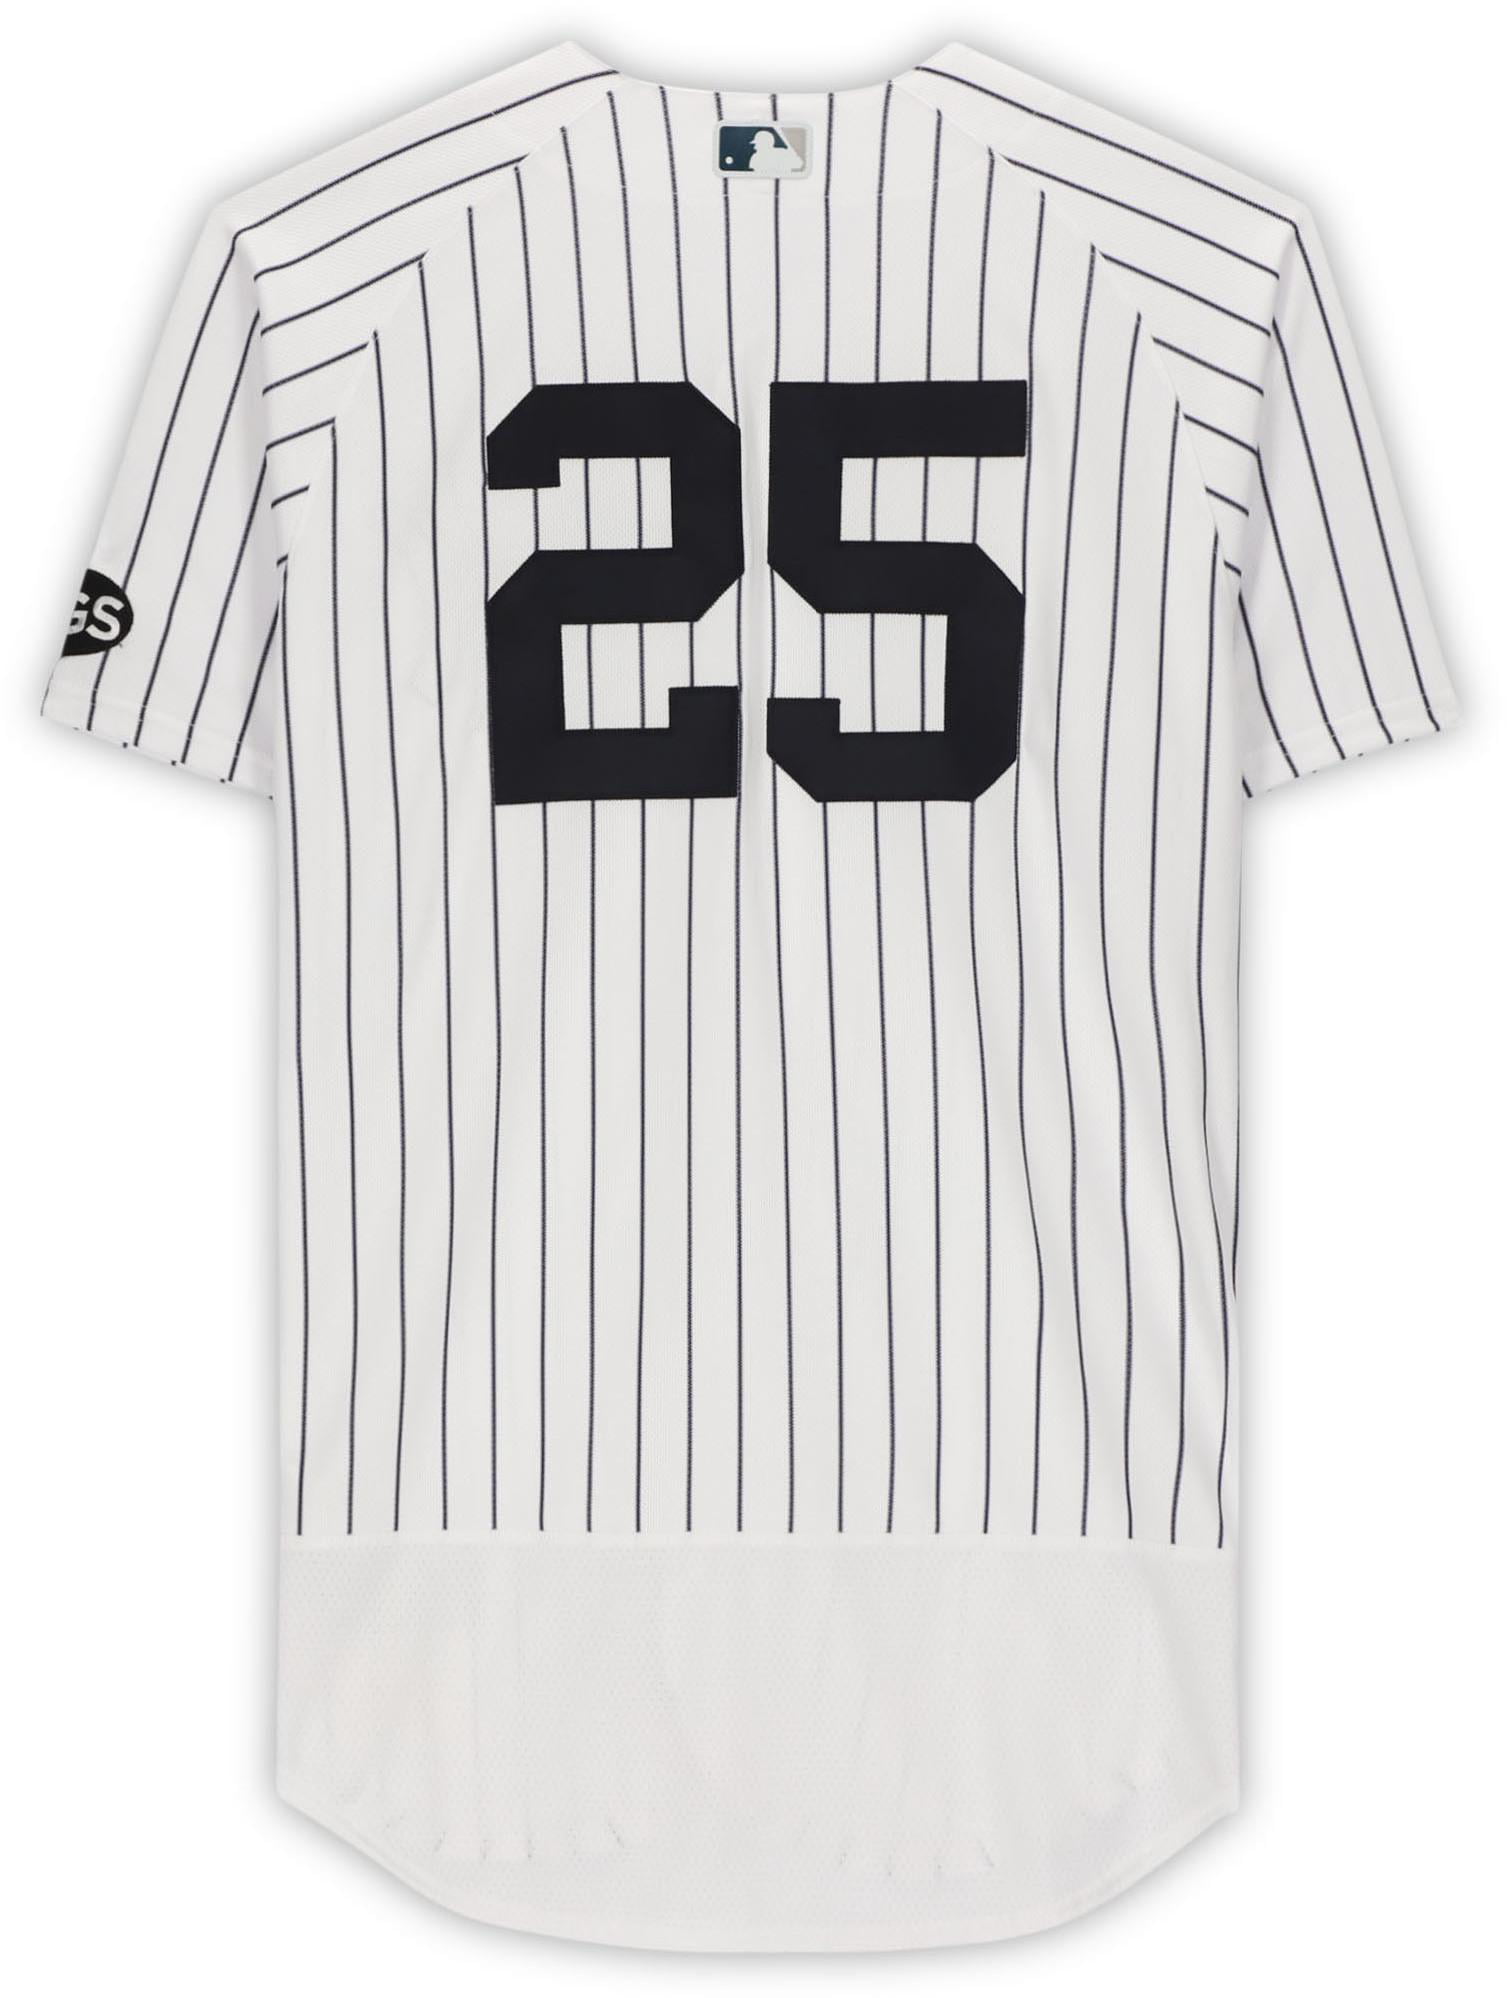 GLEYBER TORRES #25 Yankees MLBPA Officially Licensed Pinstripe Dog Jersey